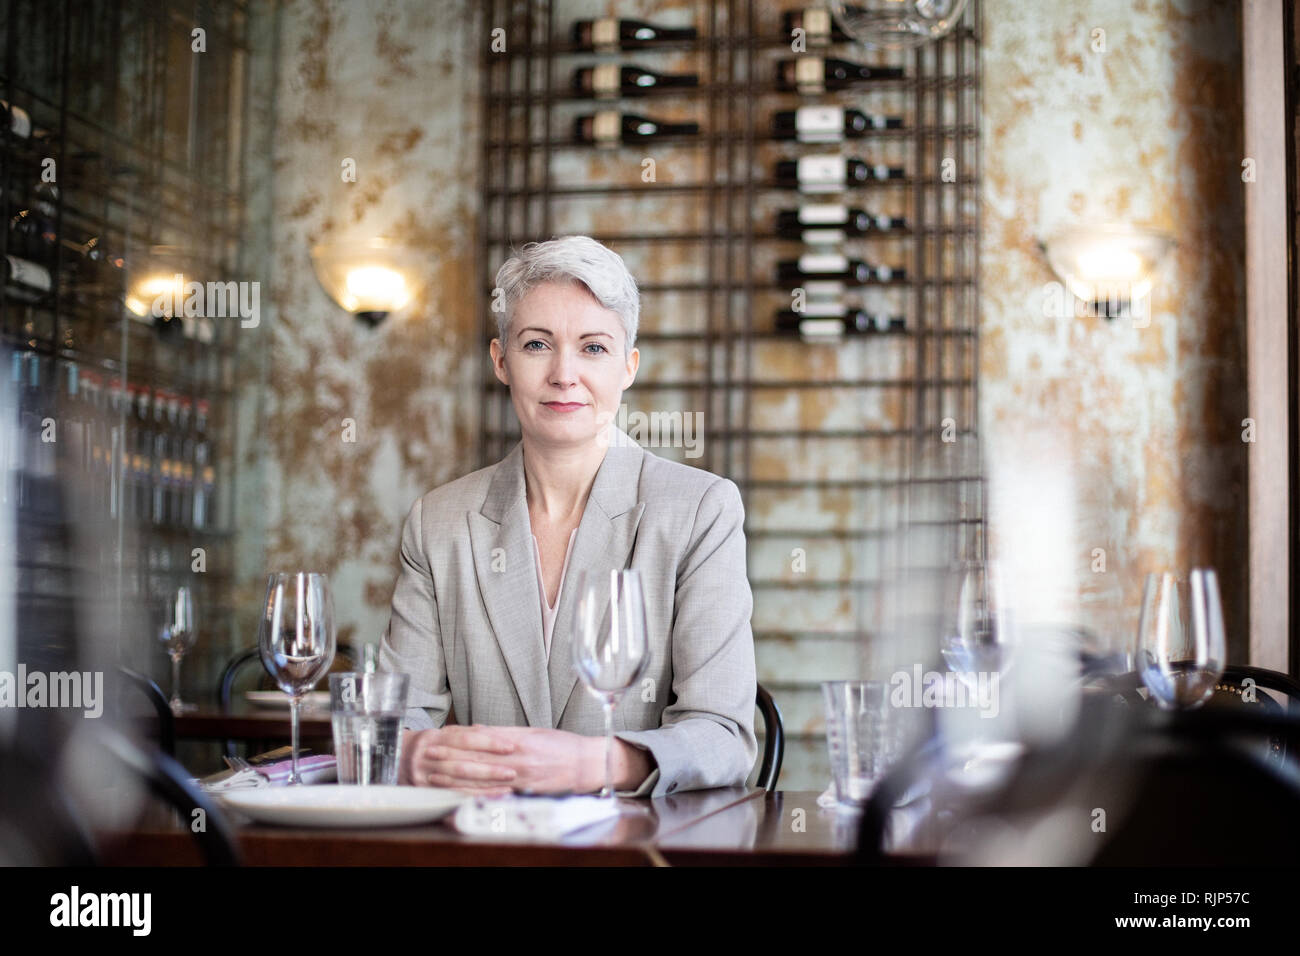 Portrait of businesswoman in a restaurant Stock Photo